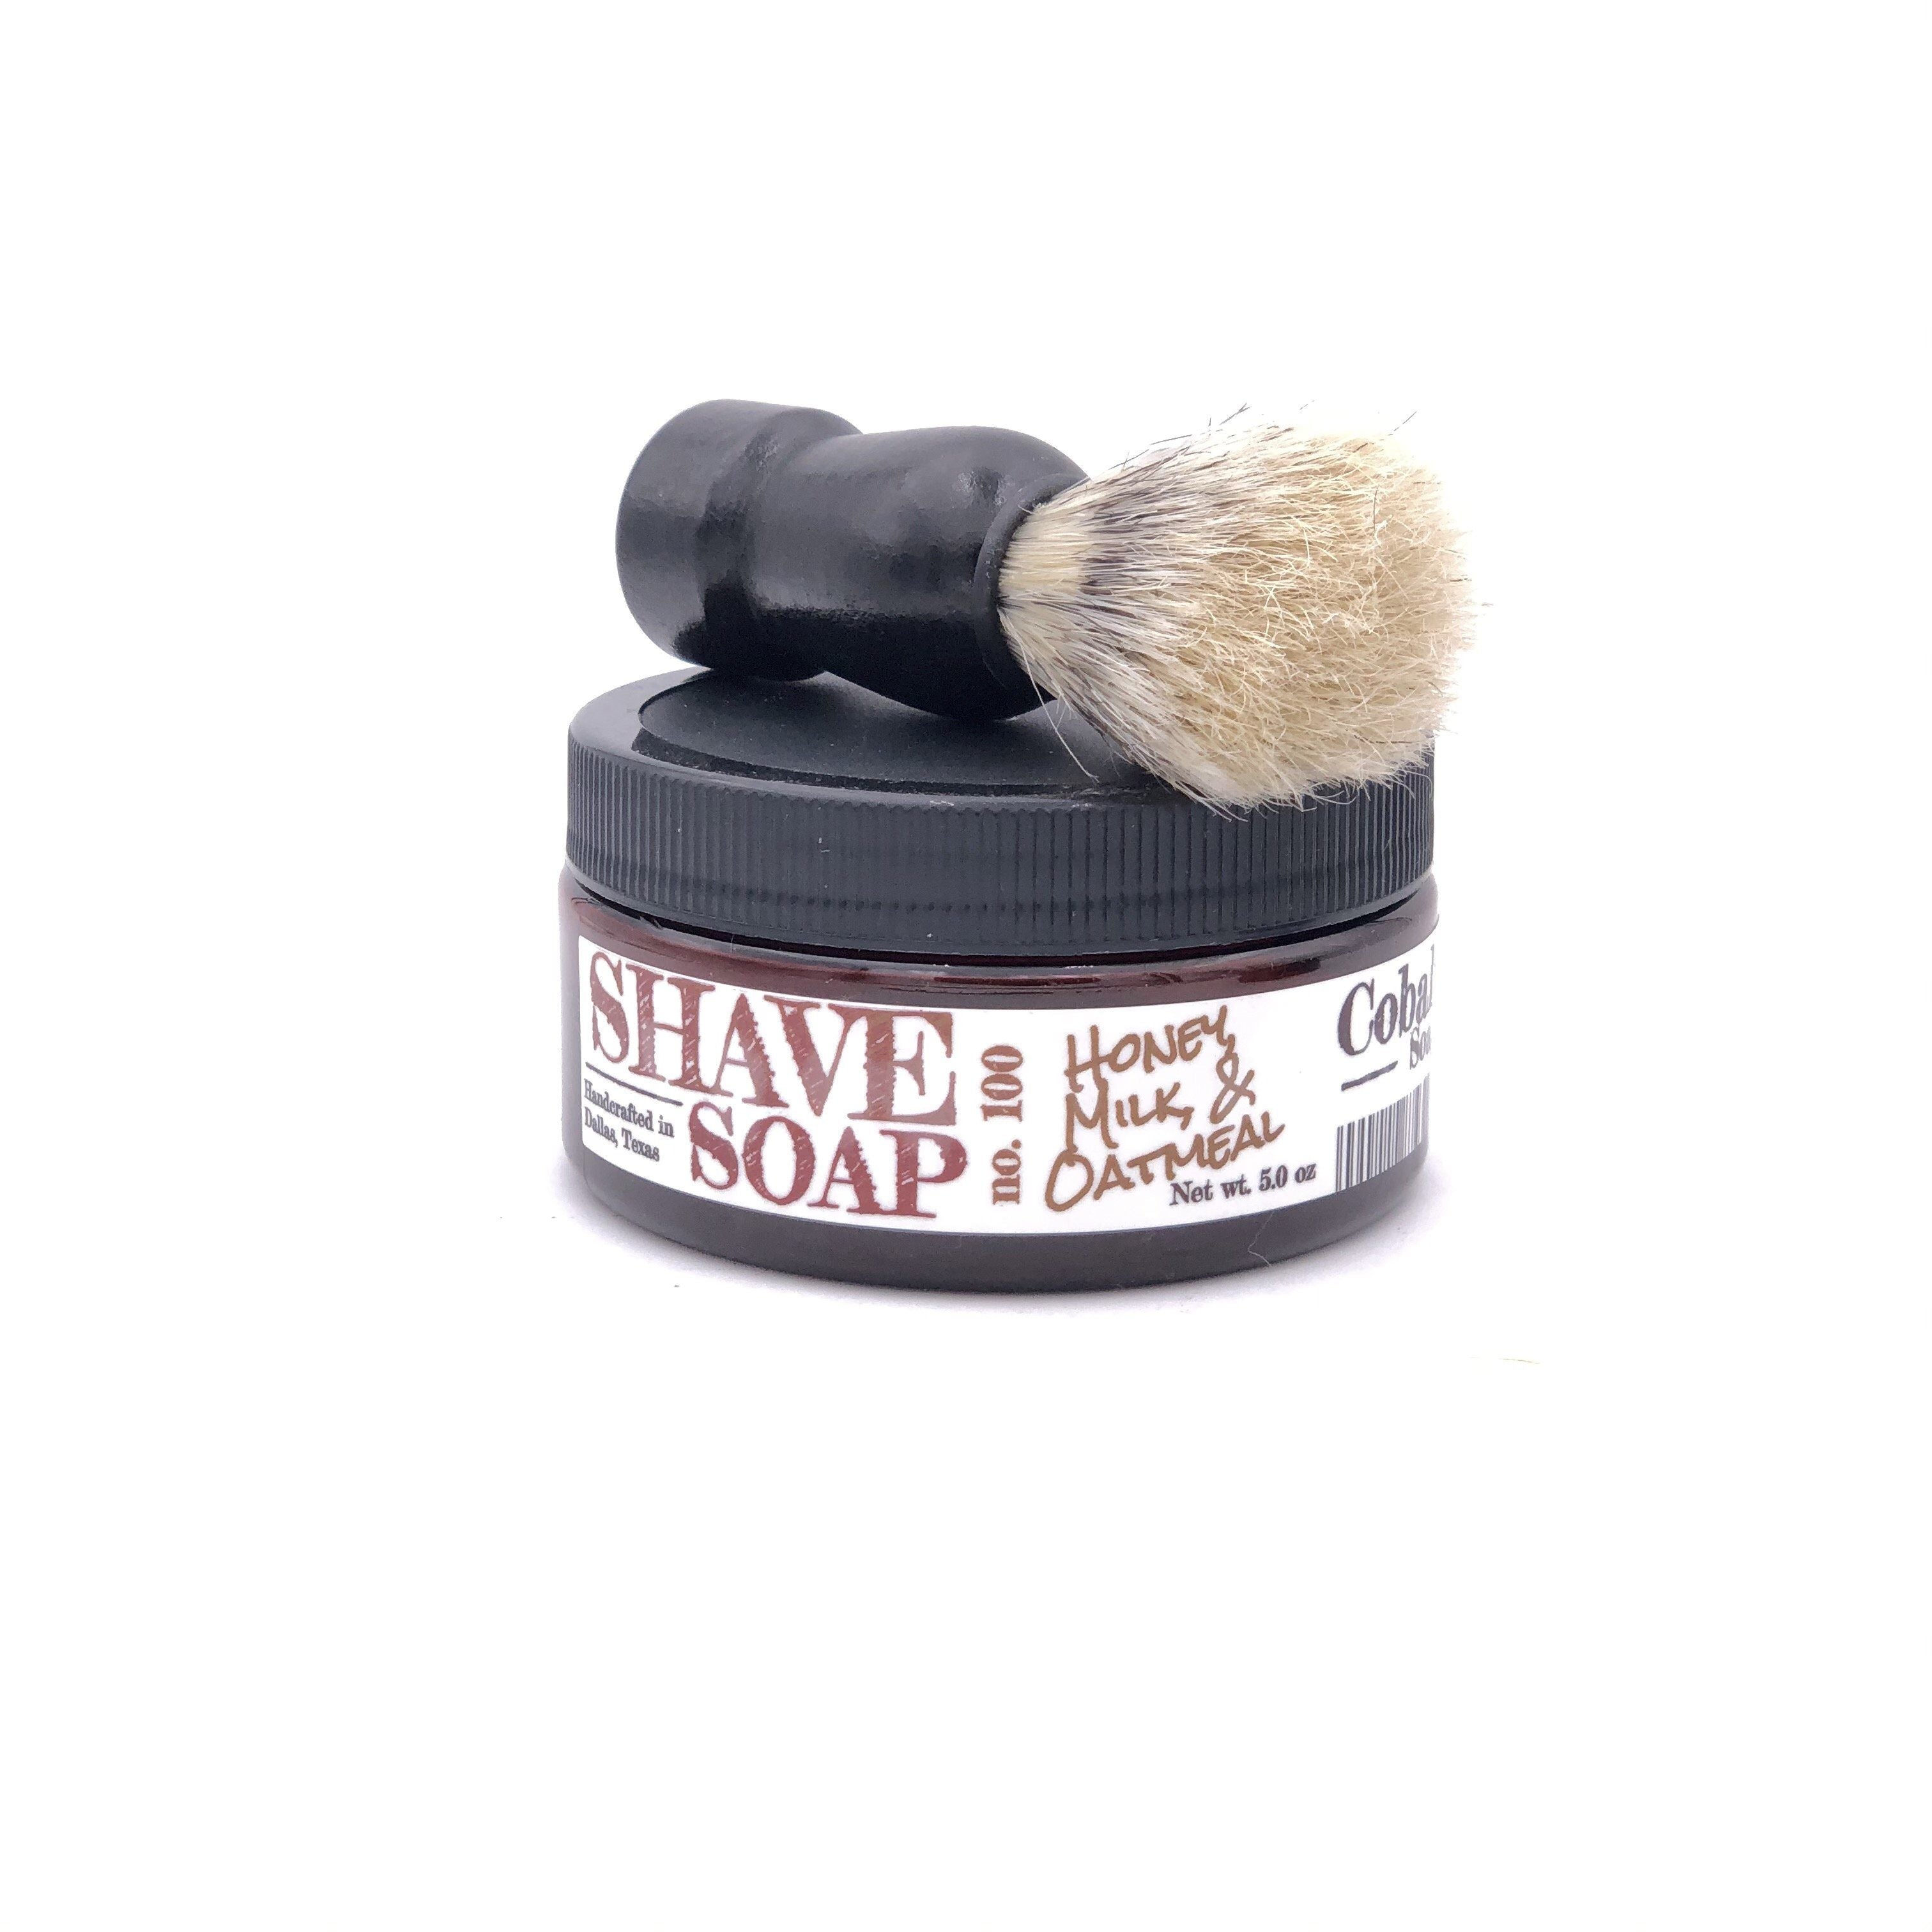 Cobalt Shave Soap no. 103 - Oatmeal, Milk, & Honey